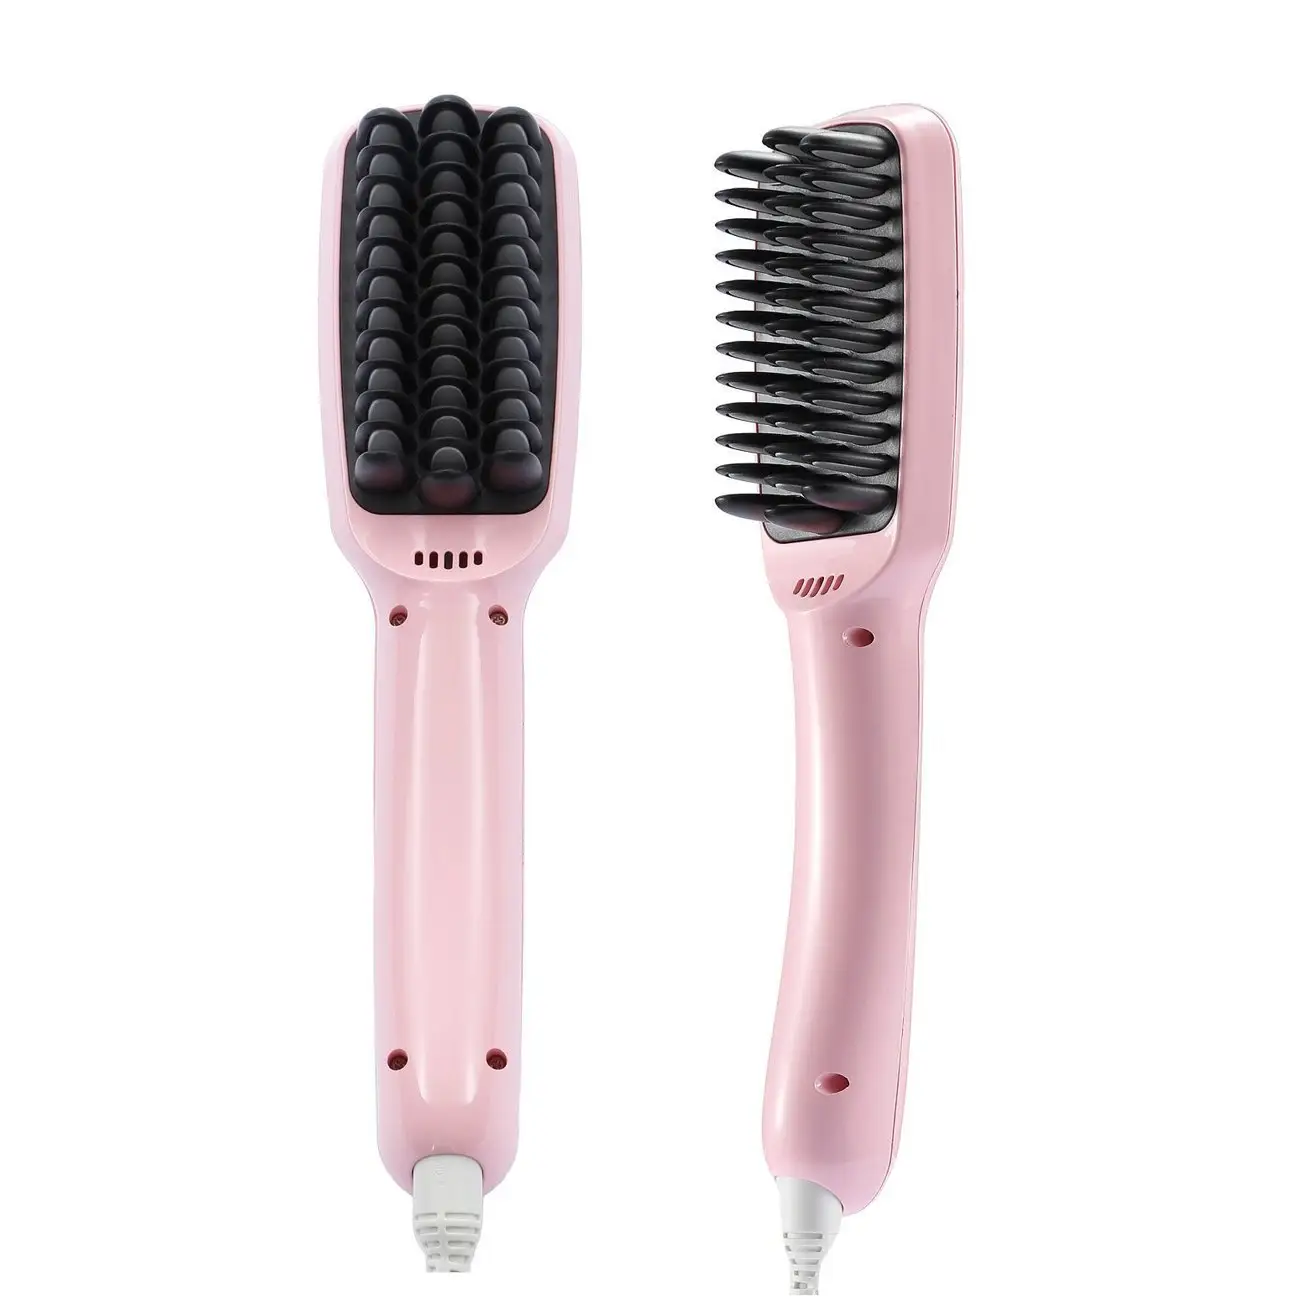 PTC heater high temperature LCD display hot comb electric hair straightening styler best selling powerful salon straighten brush